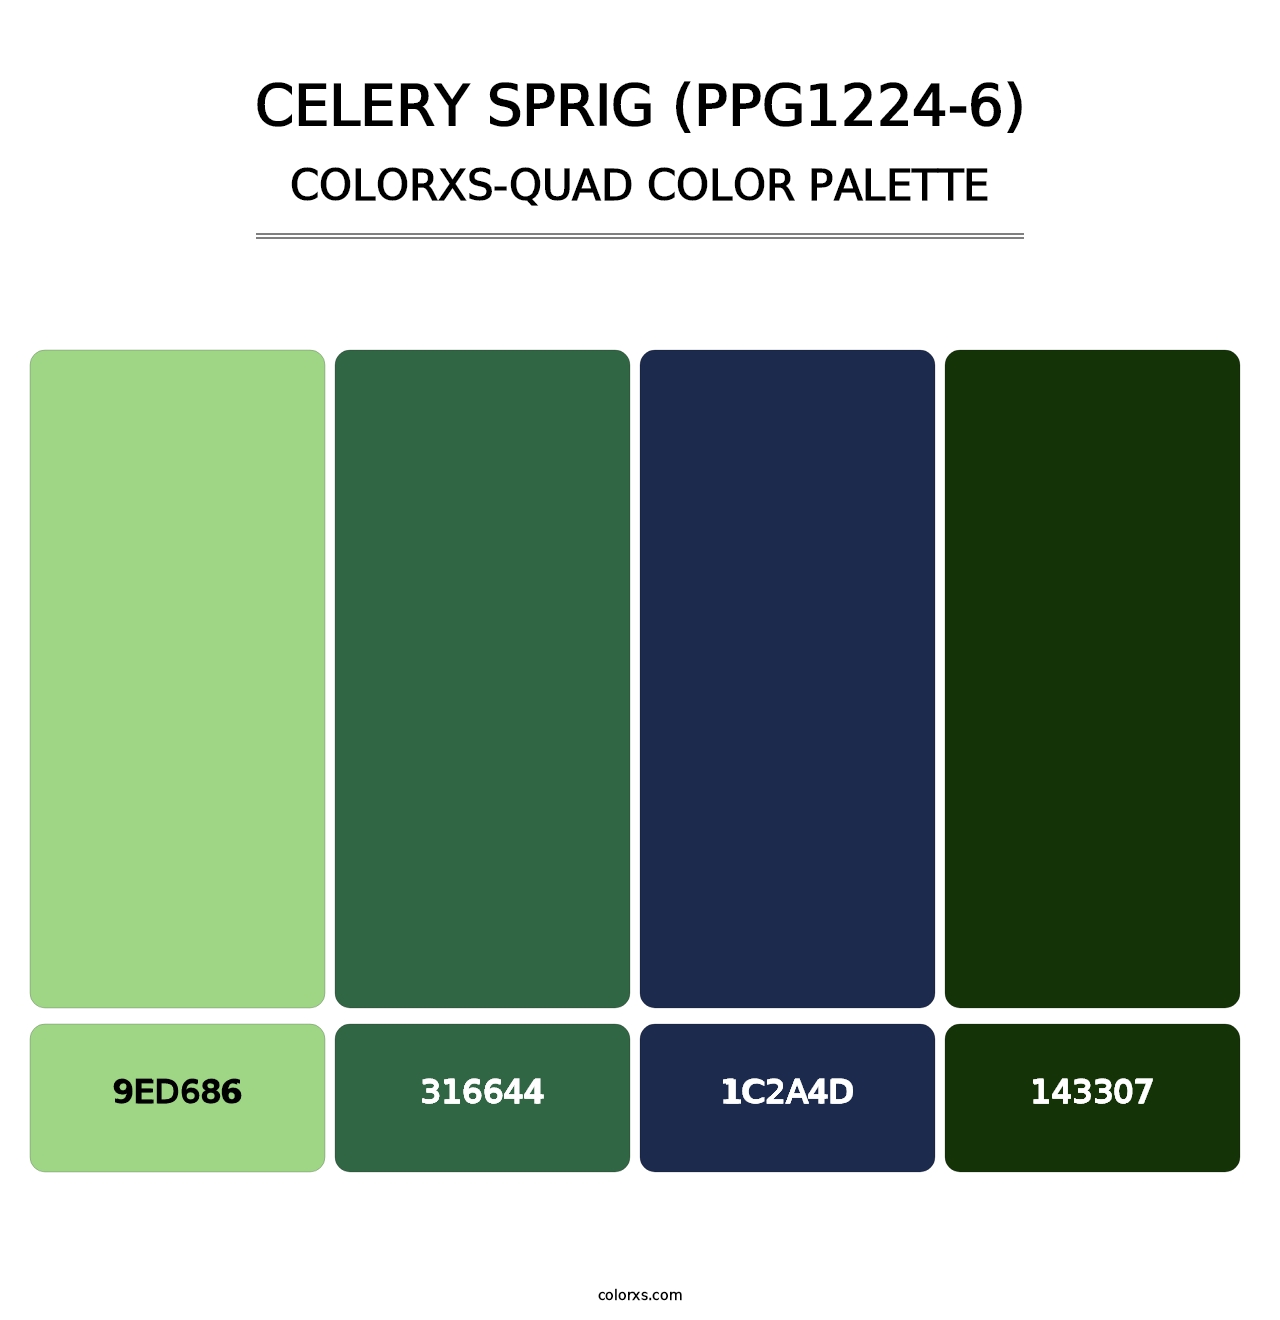 Celery Sprig (PPG1224-6) - Colorxs Quad Palette